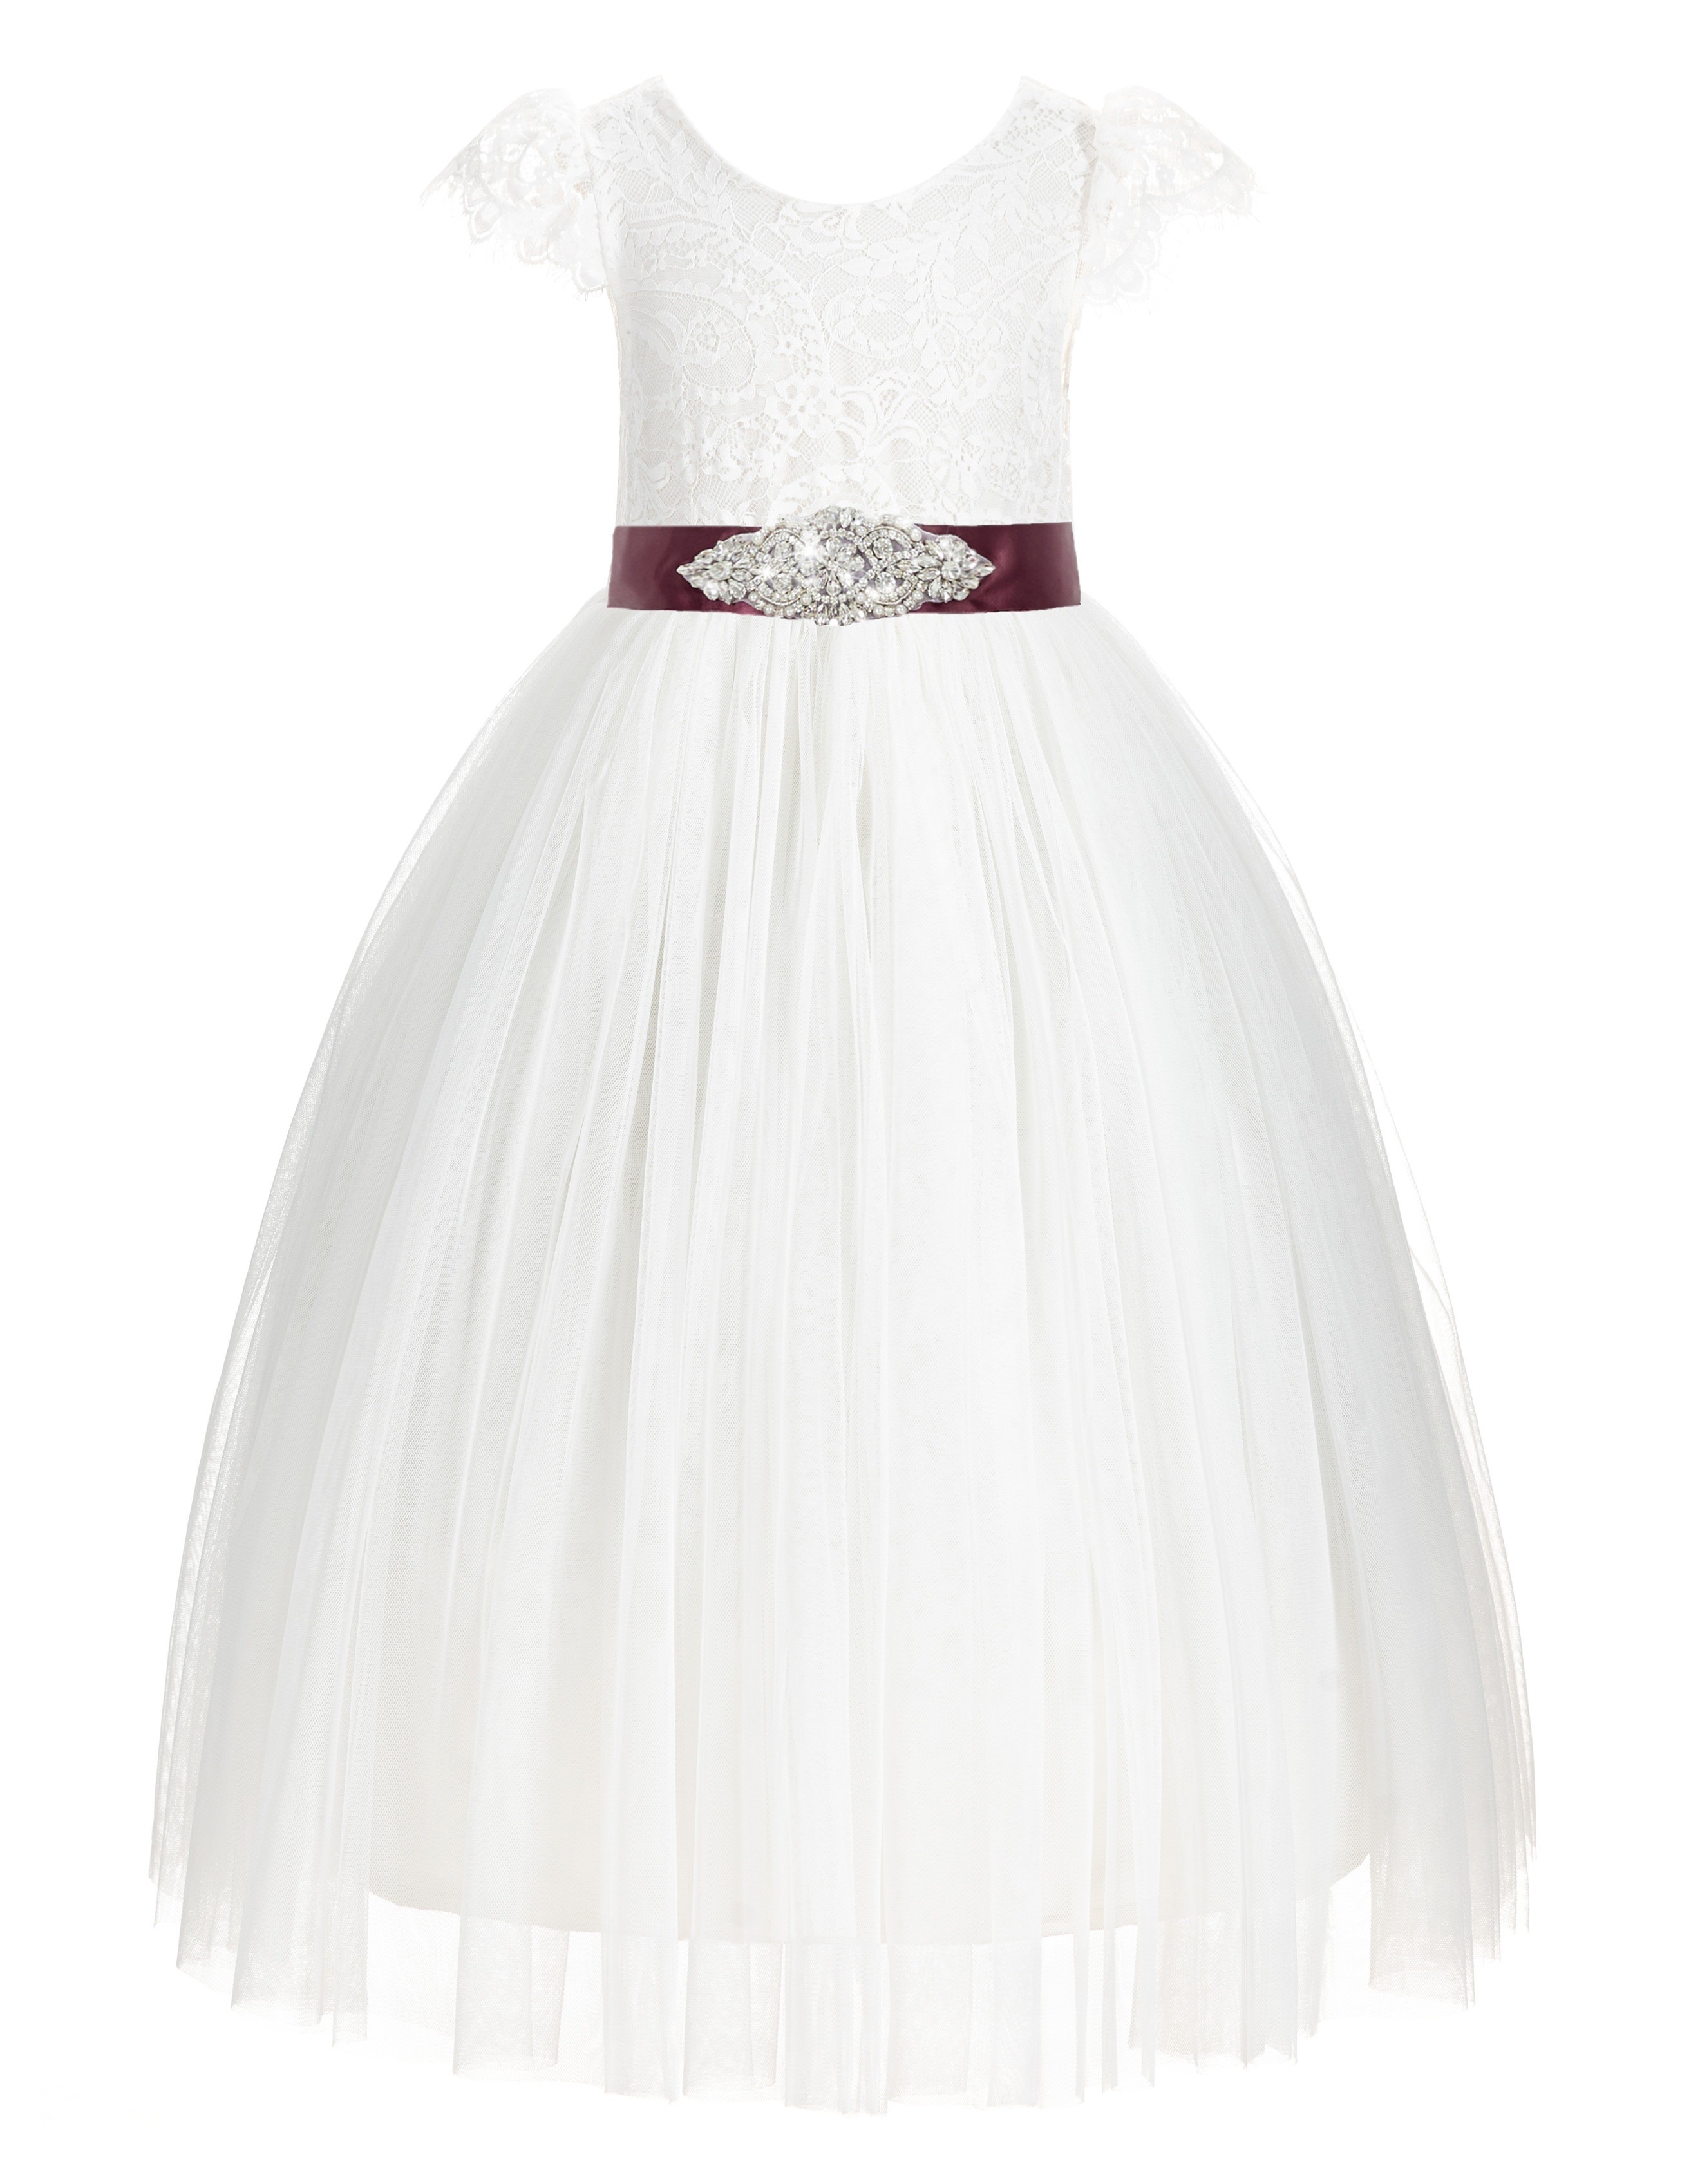 Ivory / Burgundy Cap Sleeves Lace Flower Girl Dress V-Back Lace Dress 622R3